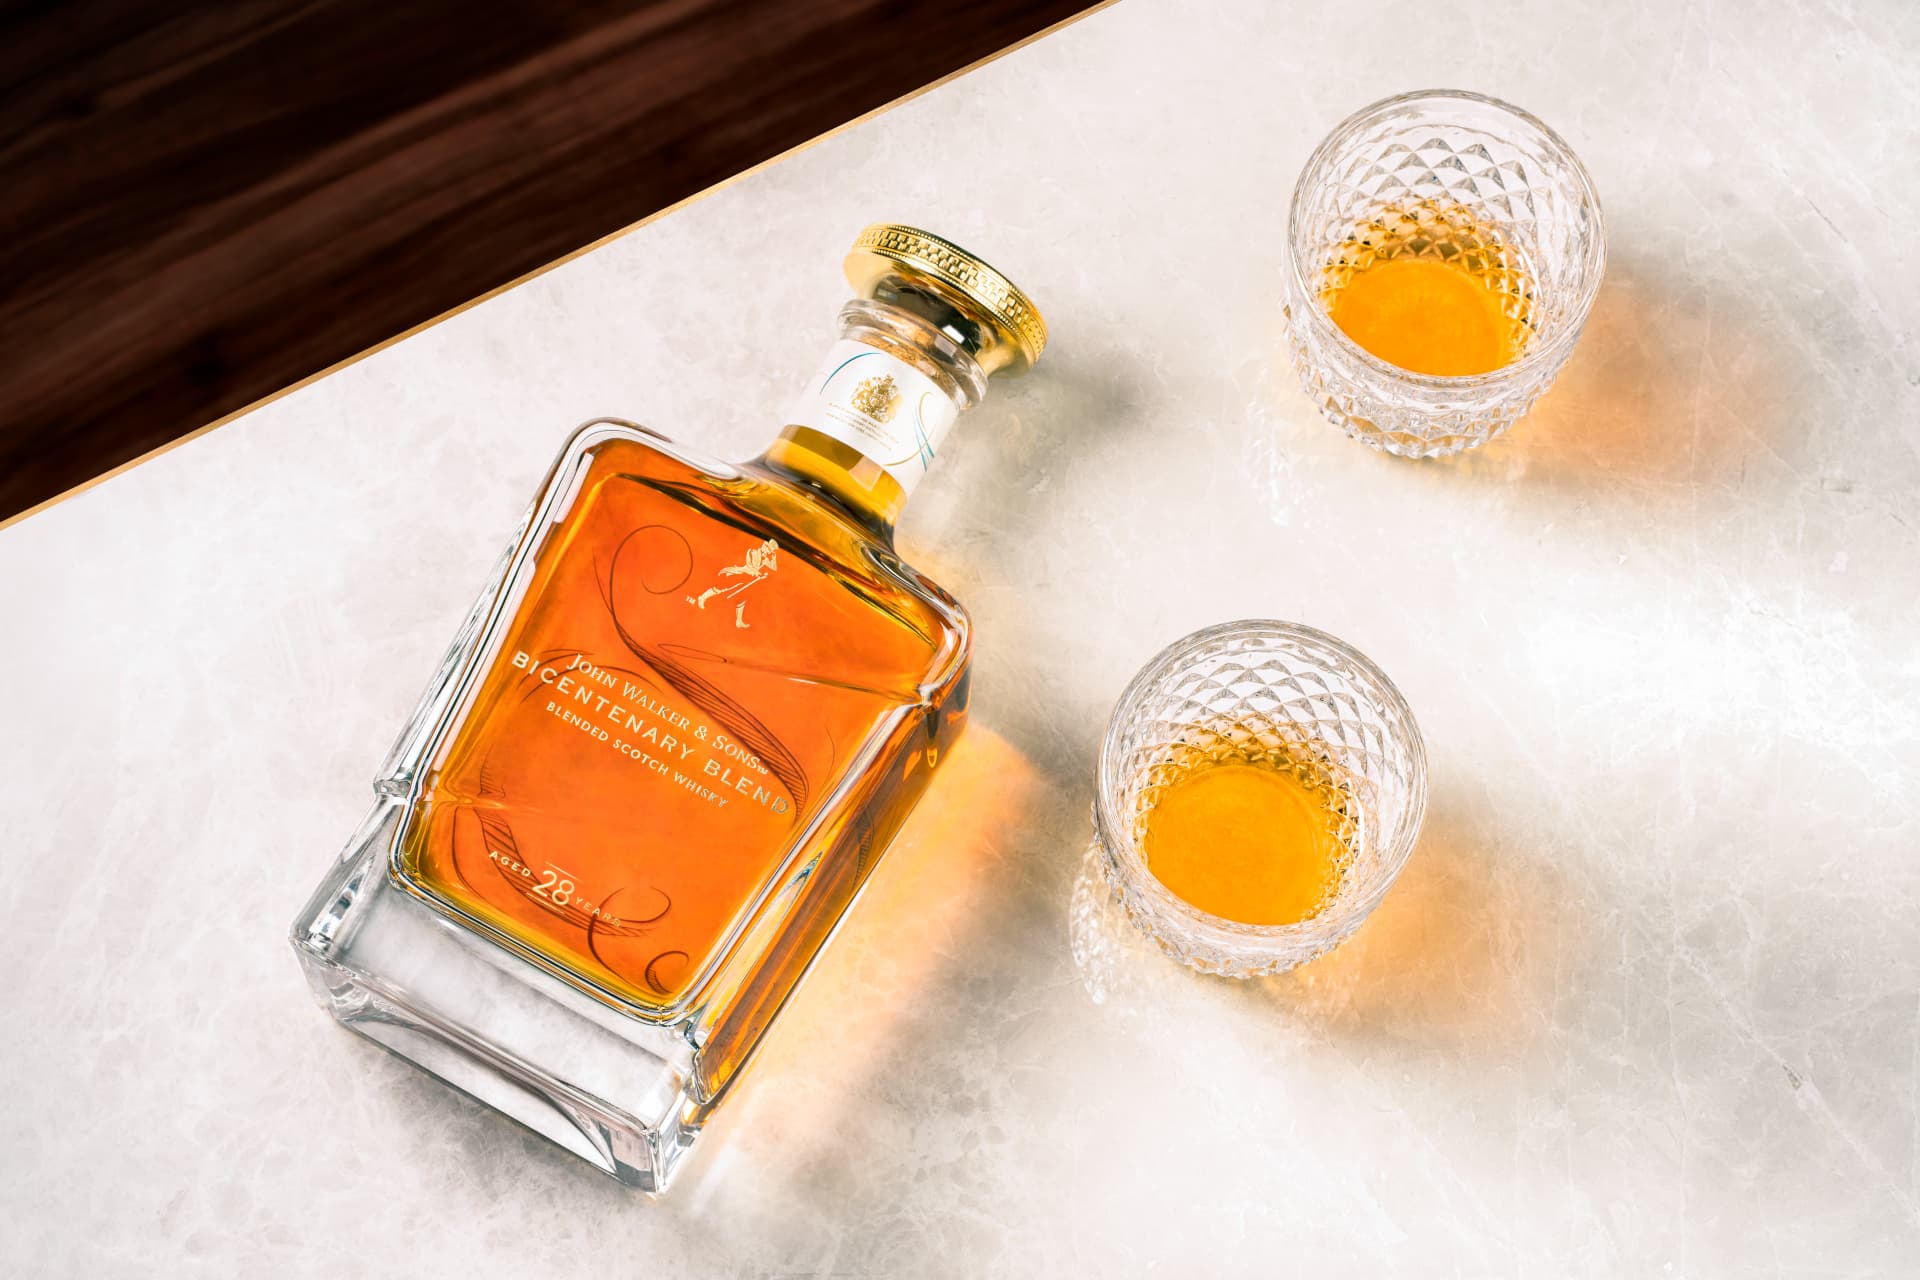 John Walker & Sons Bicentenary Blend 28 Year Old Blended Scotch Whisky Bottle Box Glassware Lifestyle